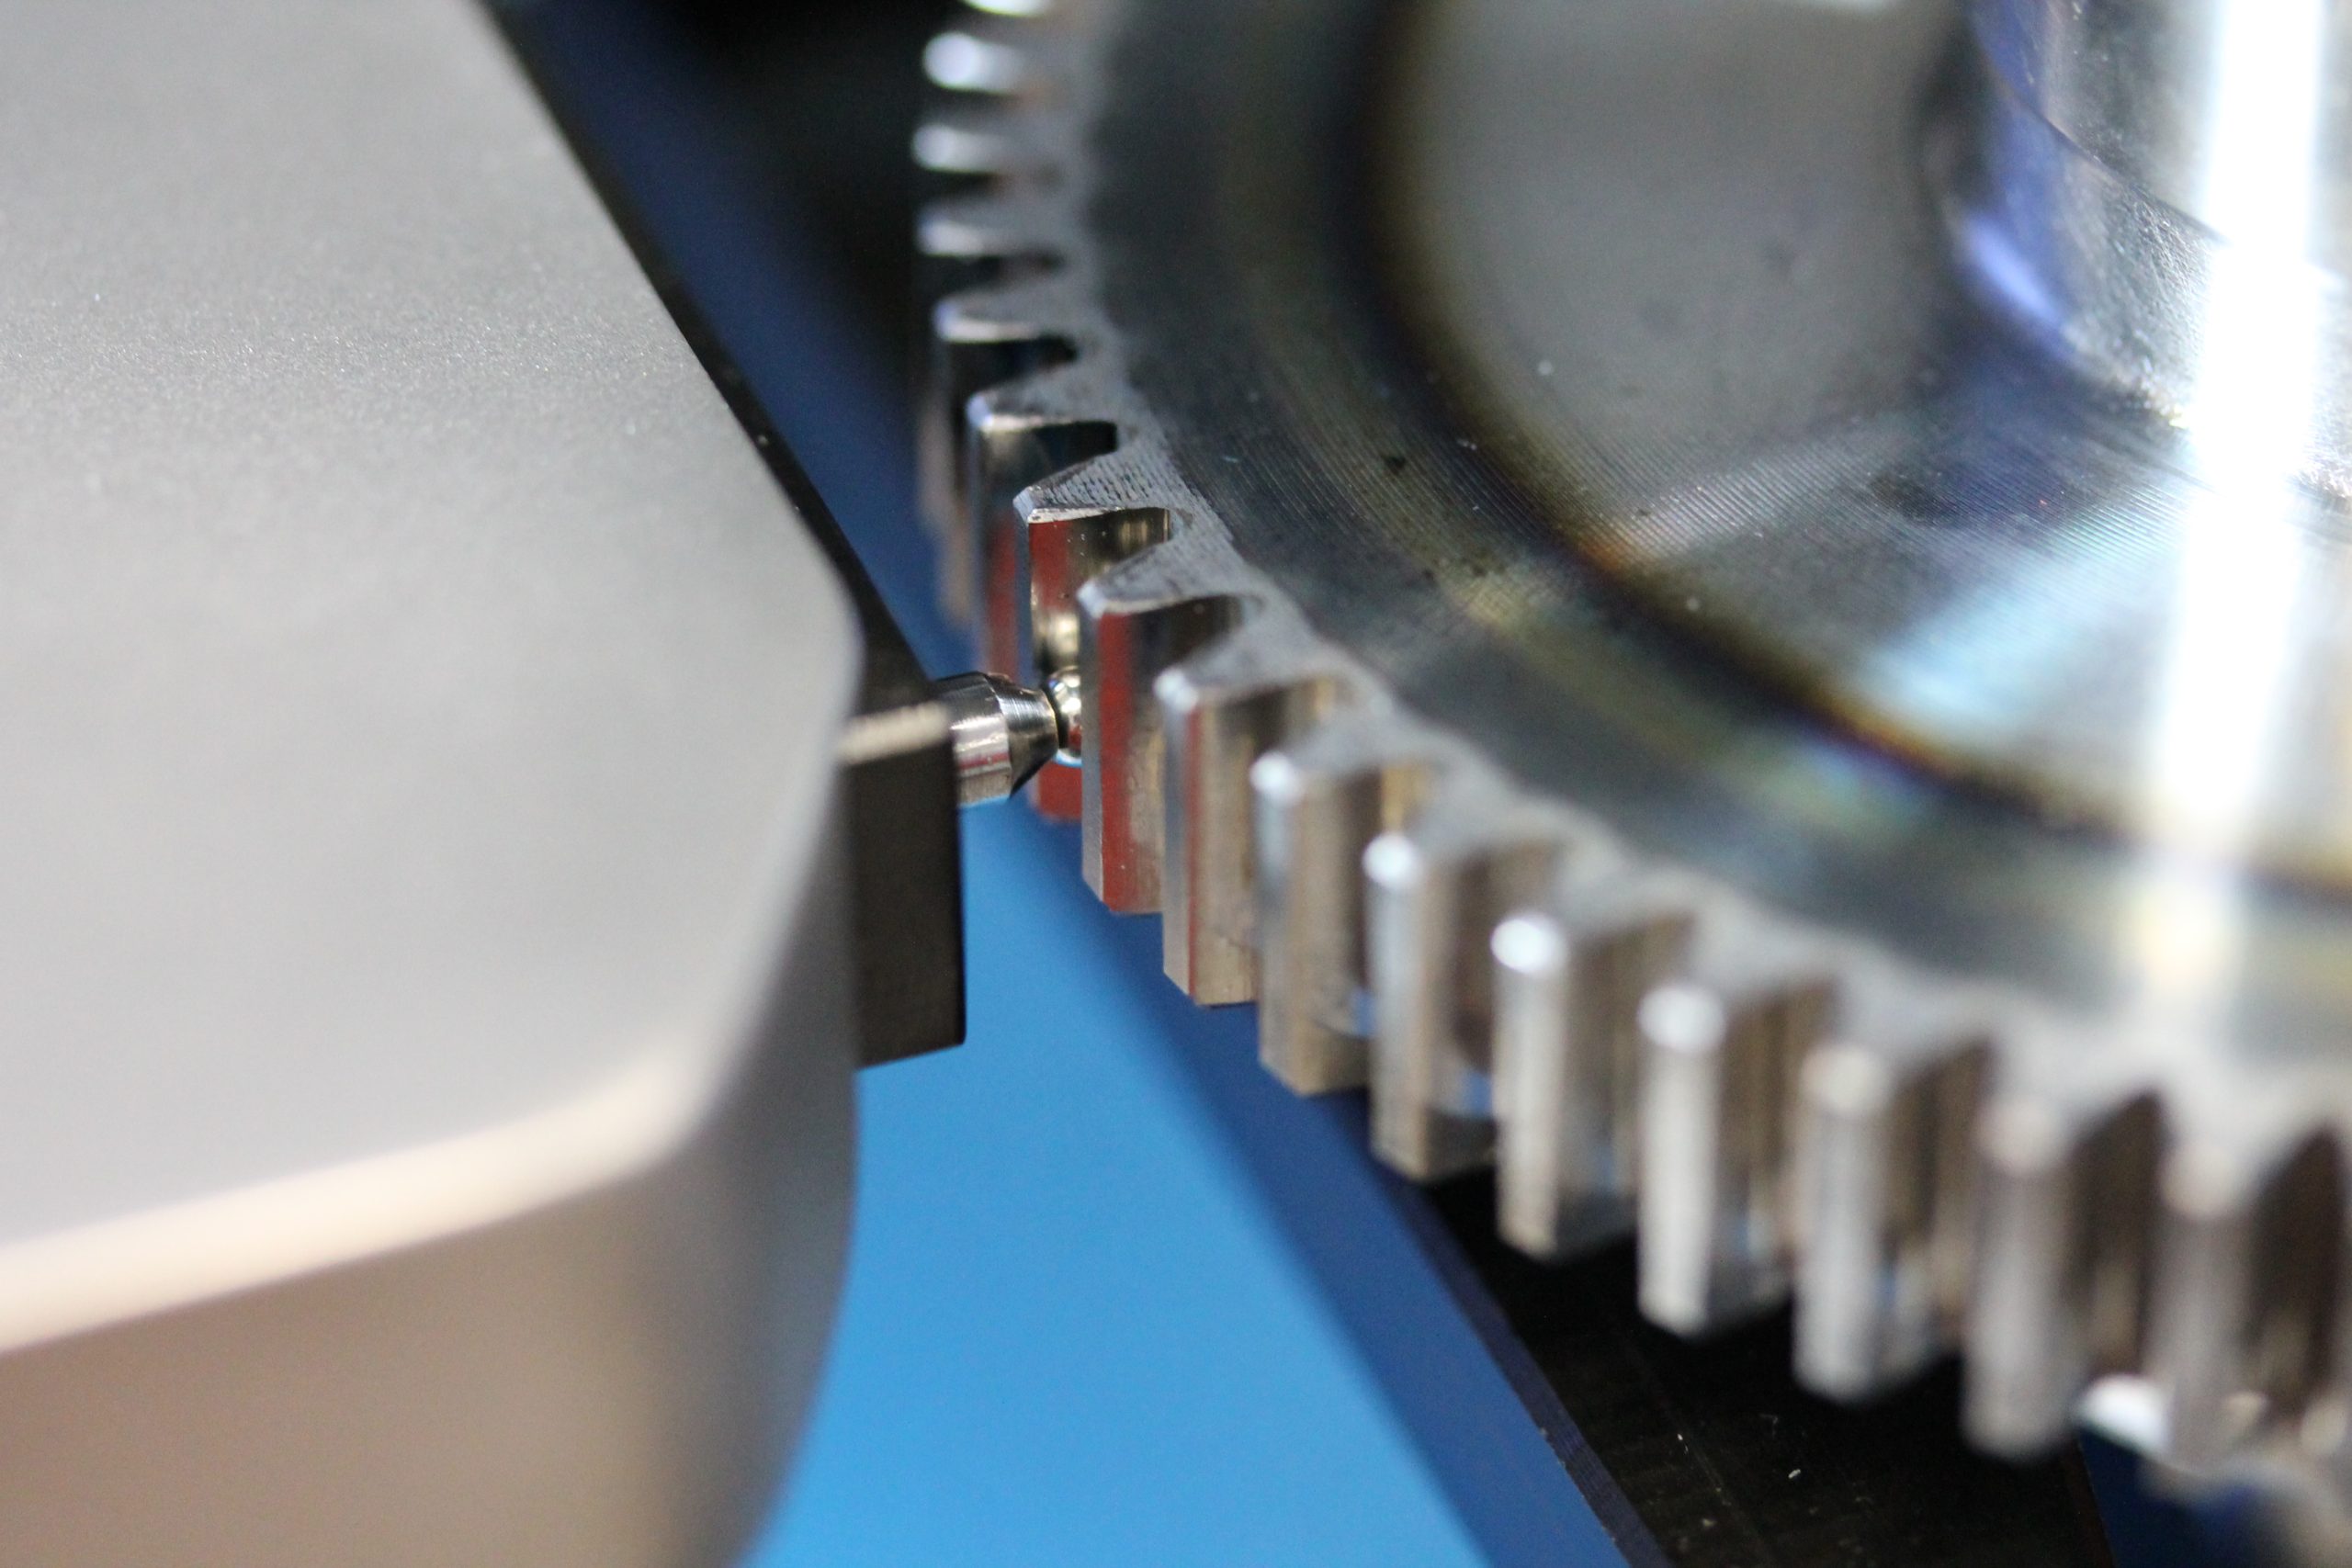  CNC Gear Measuring Instruments  Manufacturers